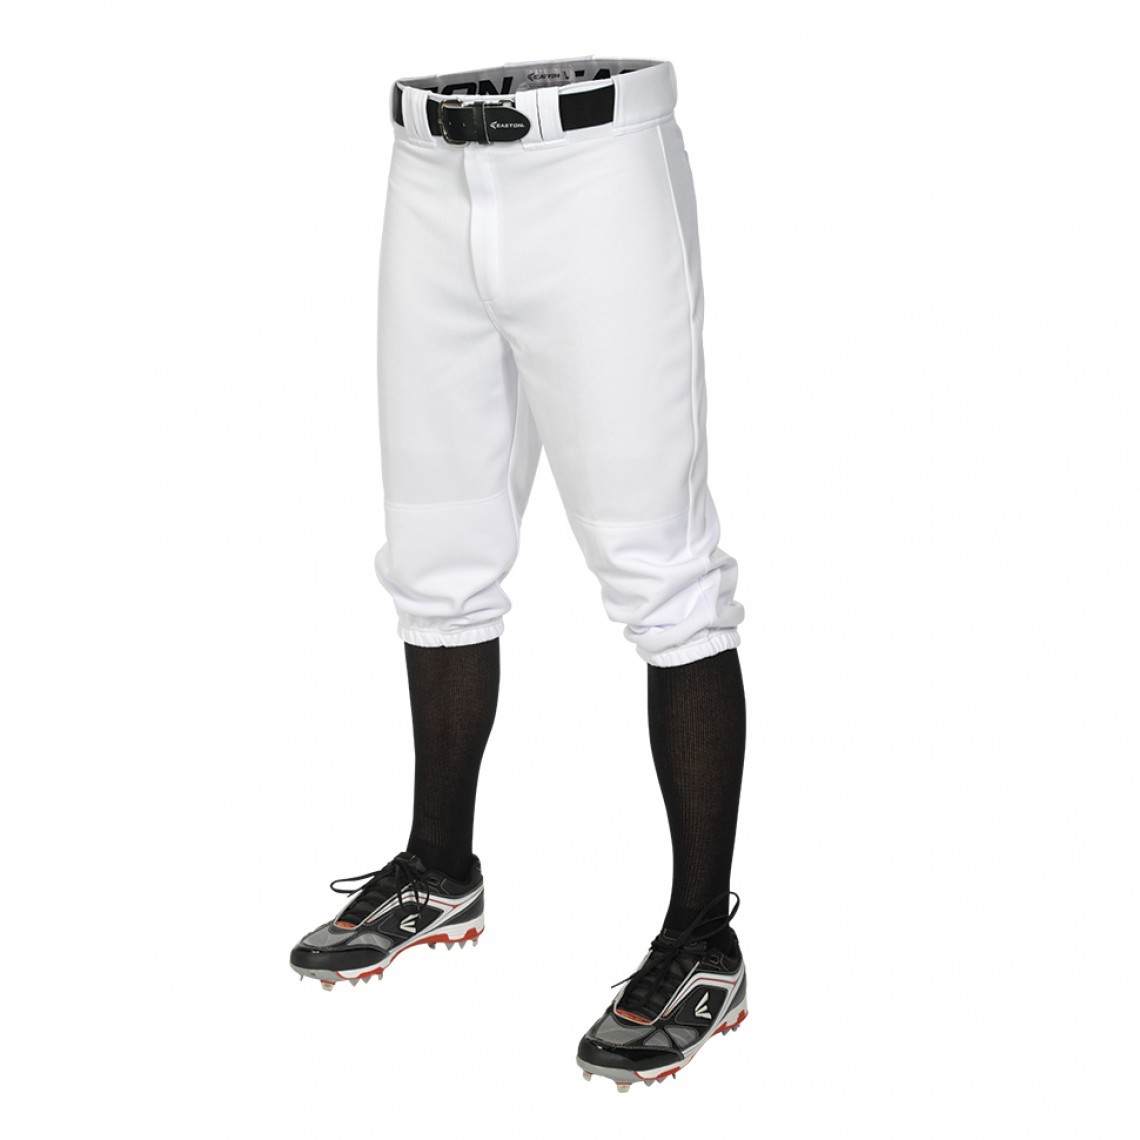 Easton Pro+ Knicker Adult Baseball pants 